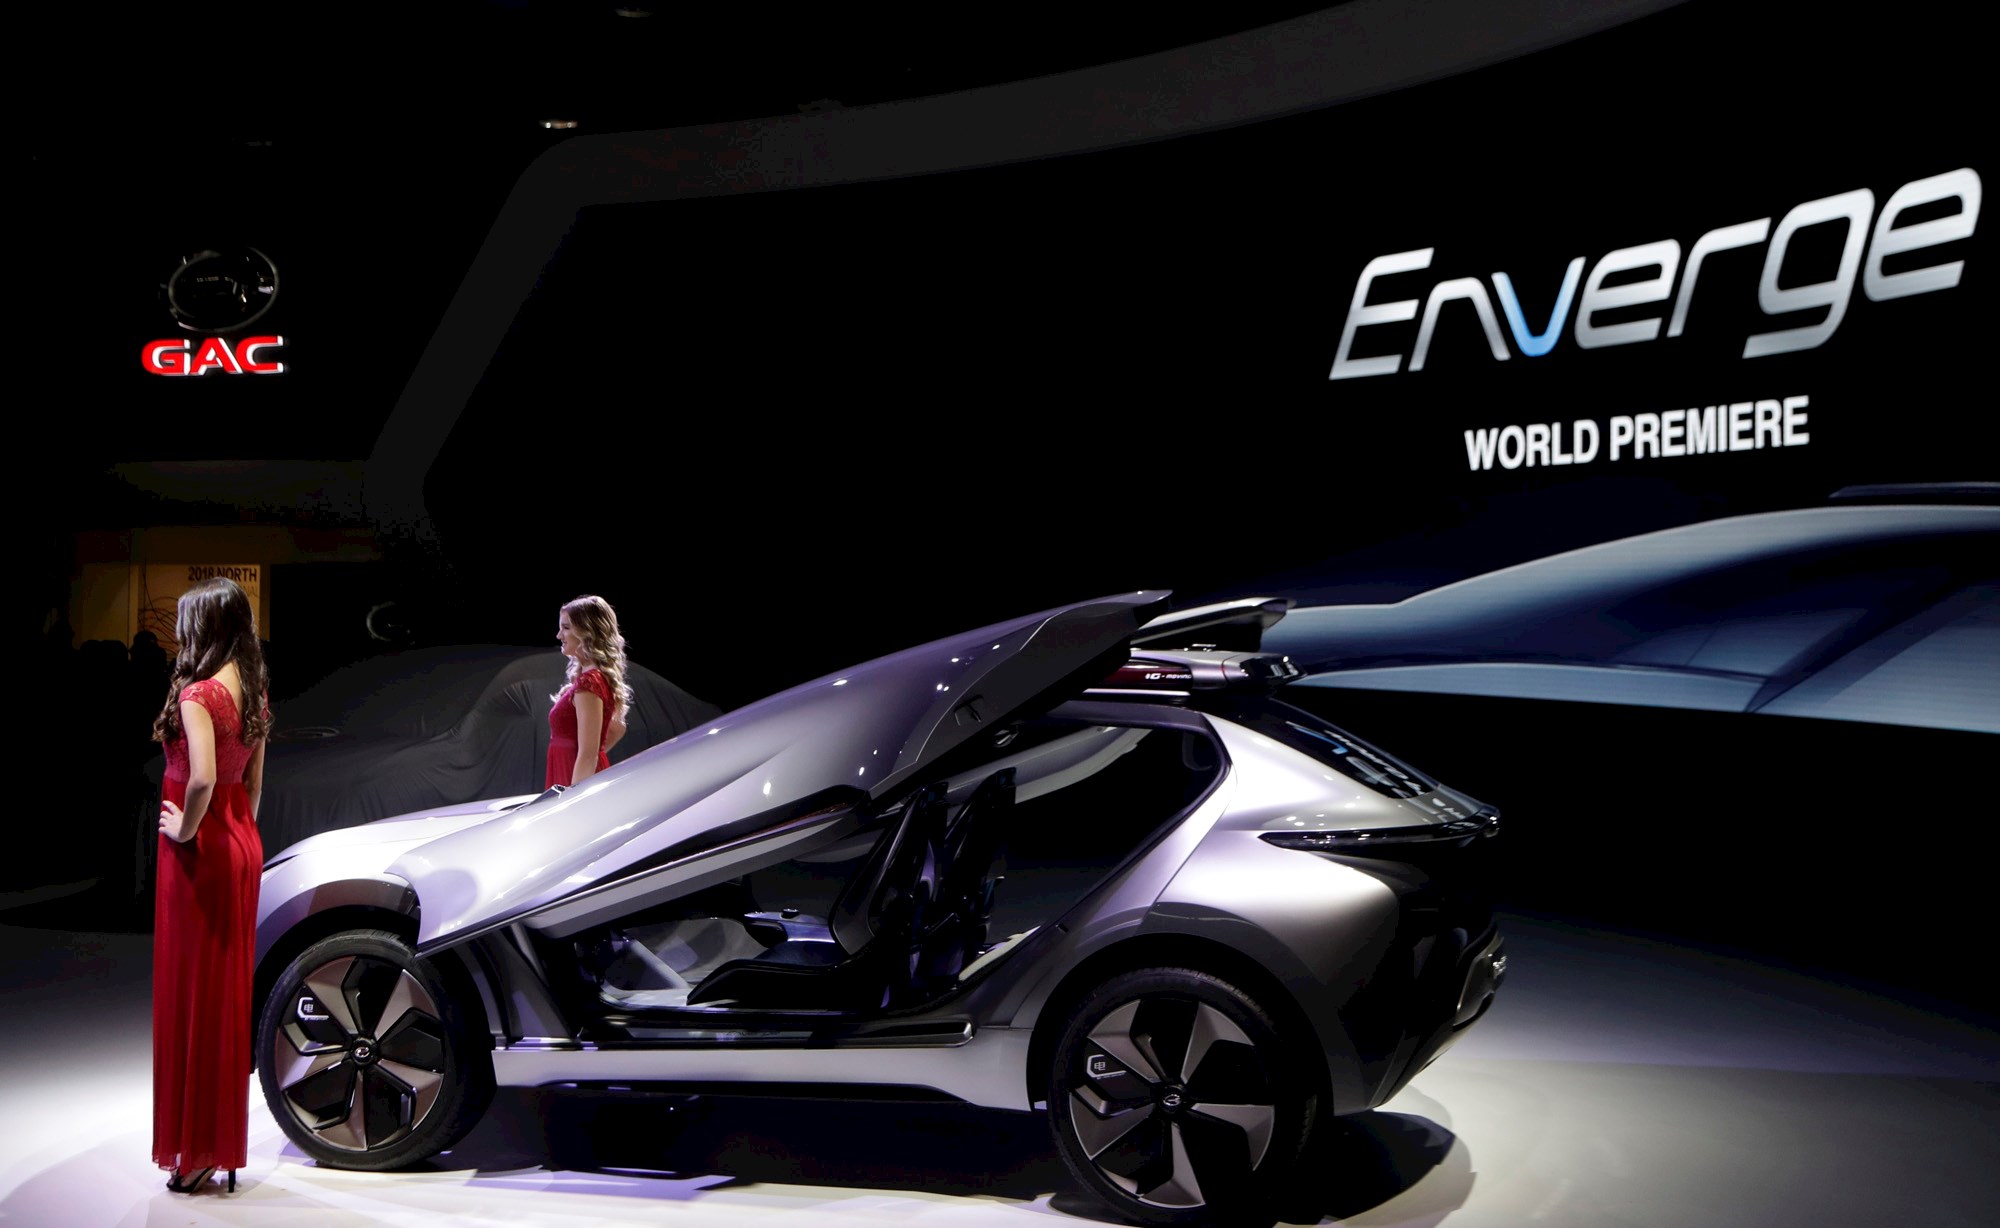 Enverge. GAC’s slick electric concept car